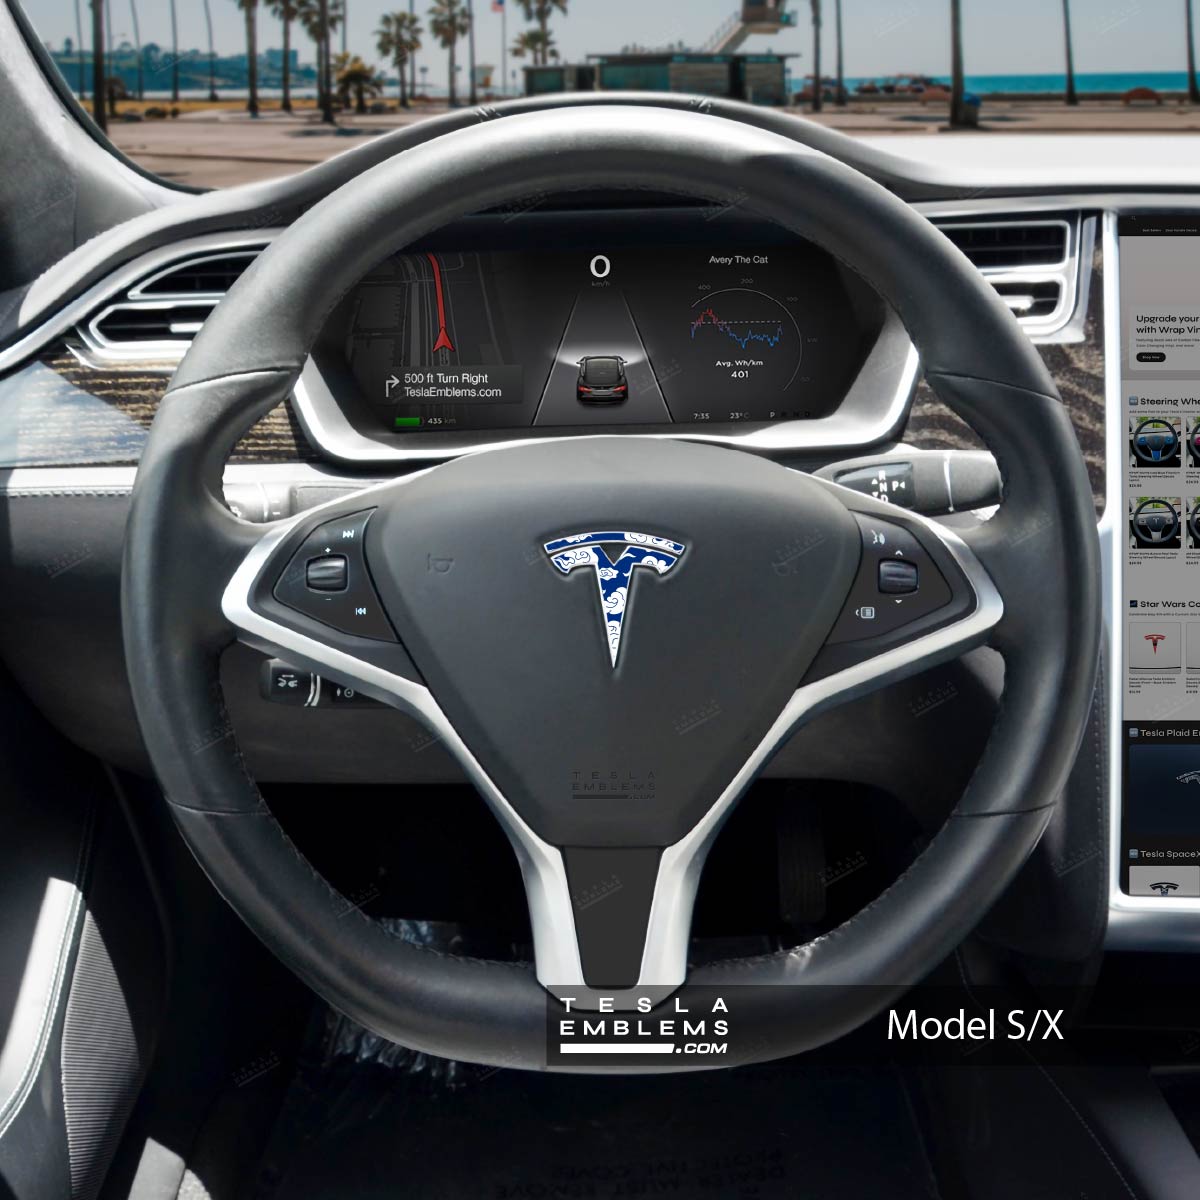 Japanese-Stylized Cloud Tesla Steering Wheel Emblem Decal - Tesla Emblems